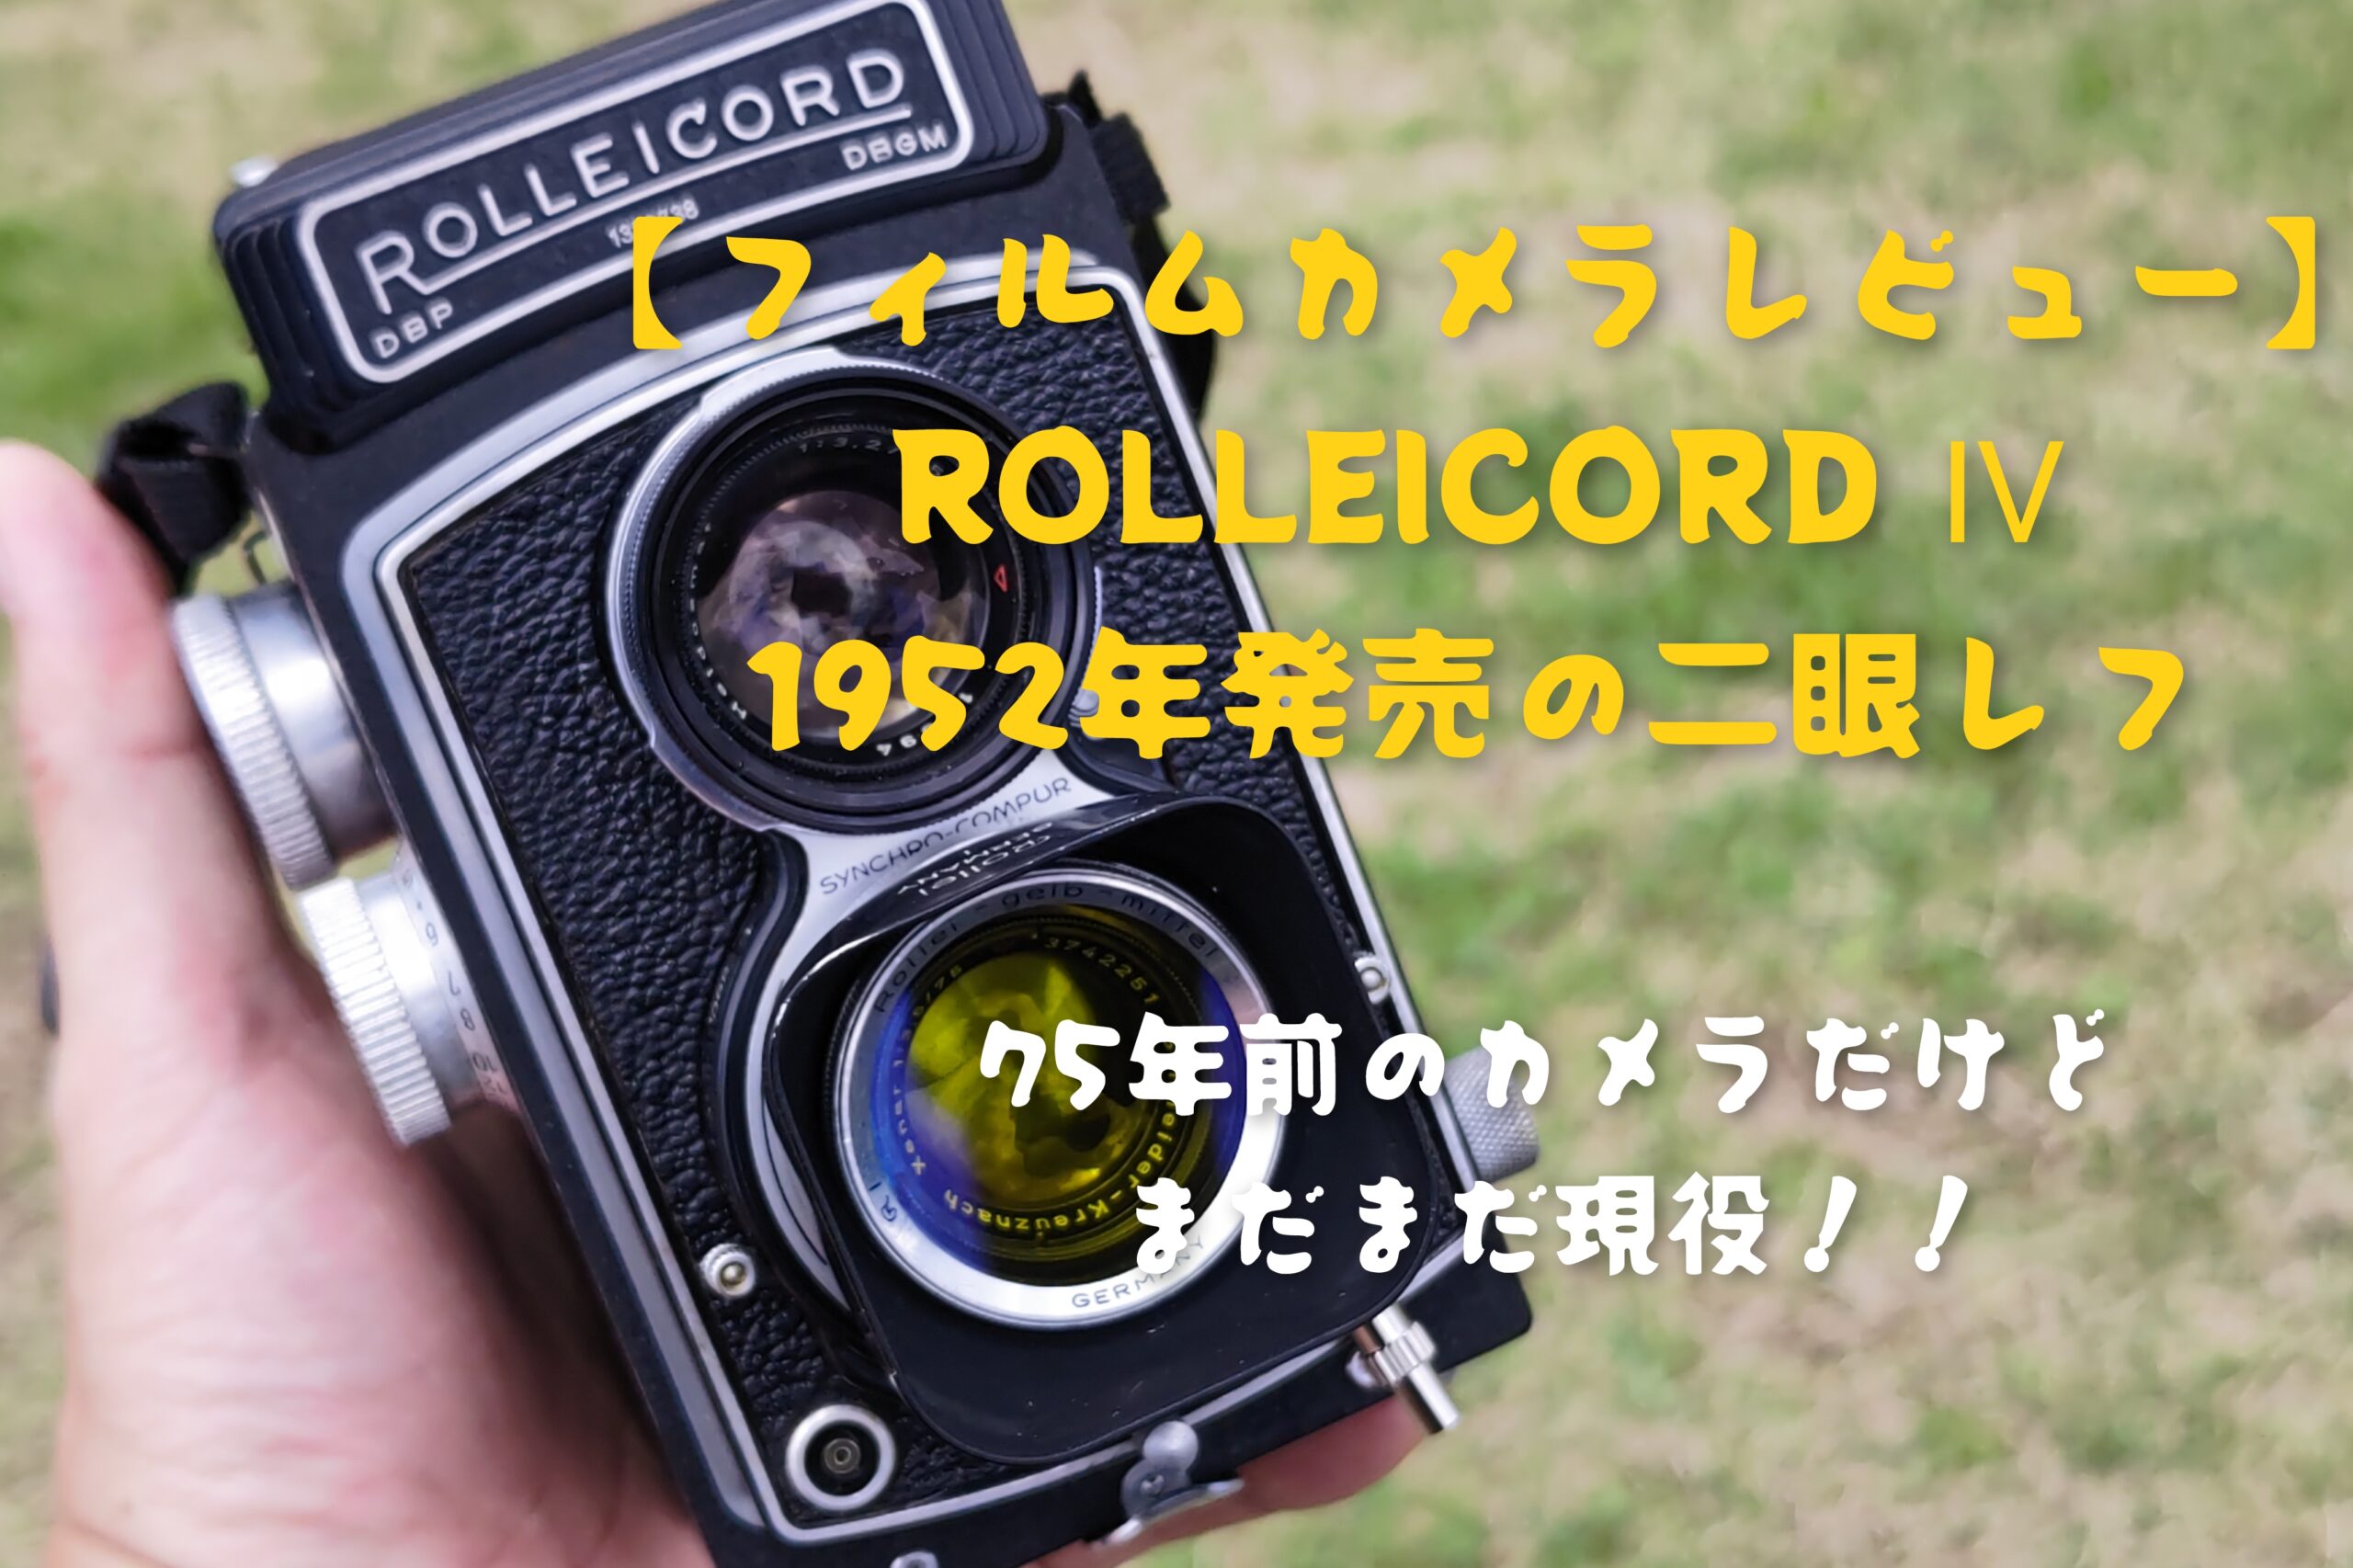 Rollicord Ⅳ